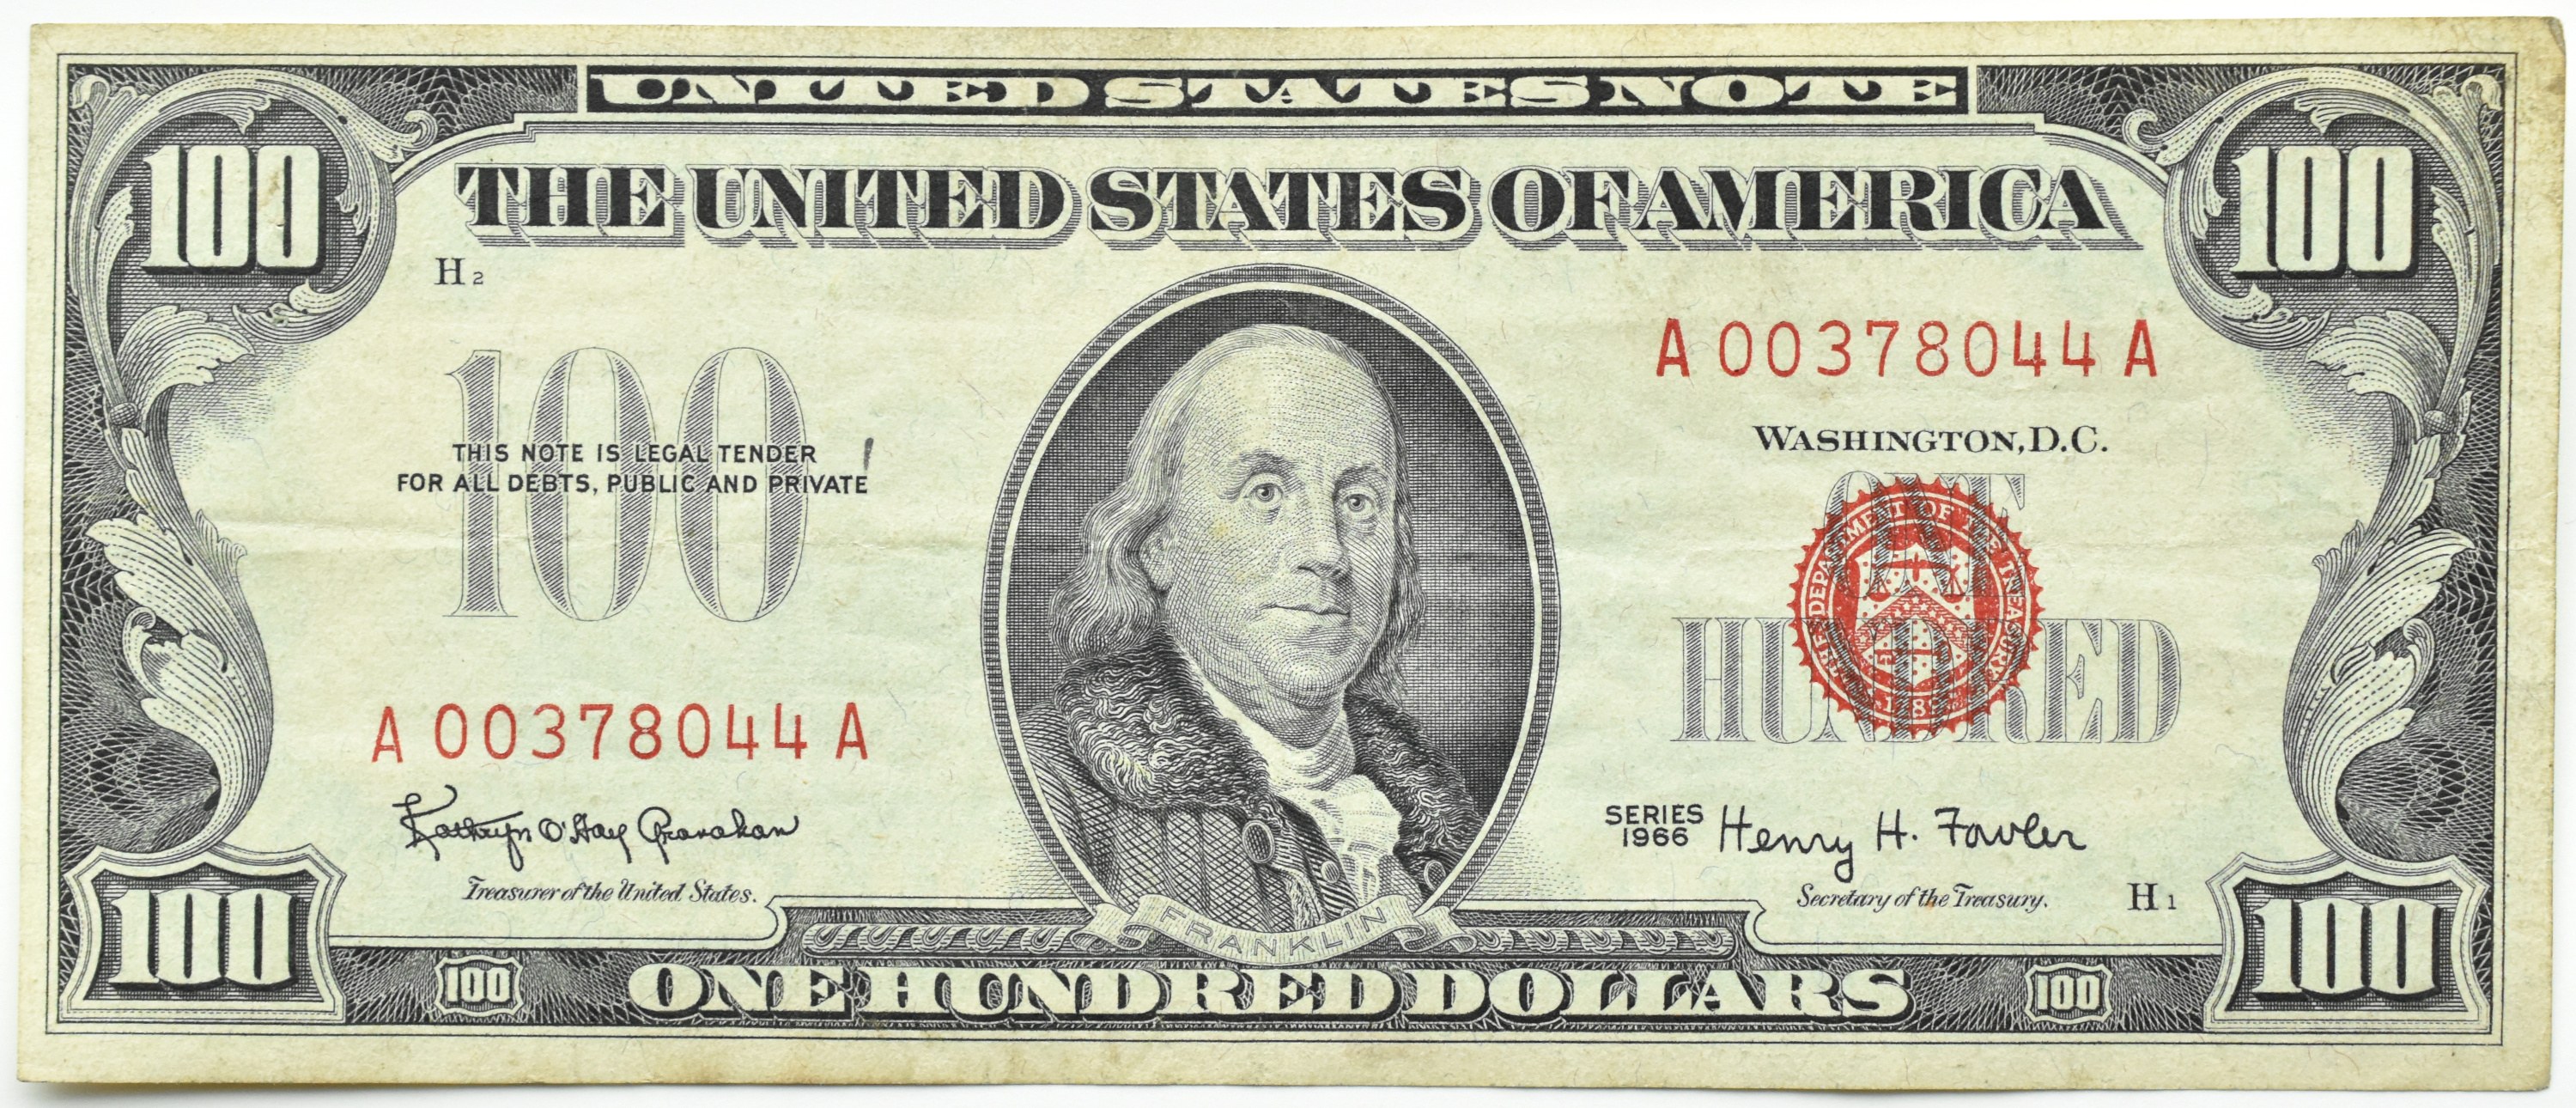 Доллары старше 2006 года